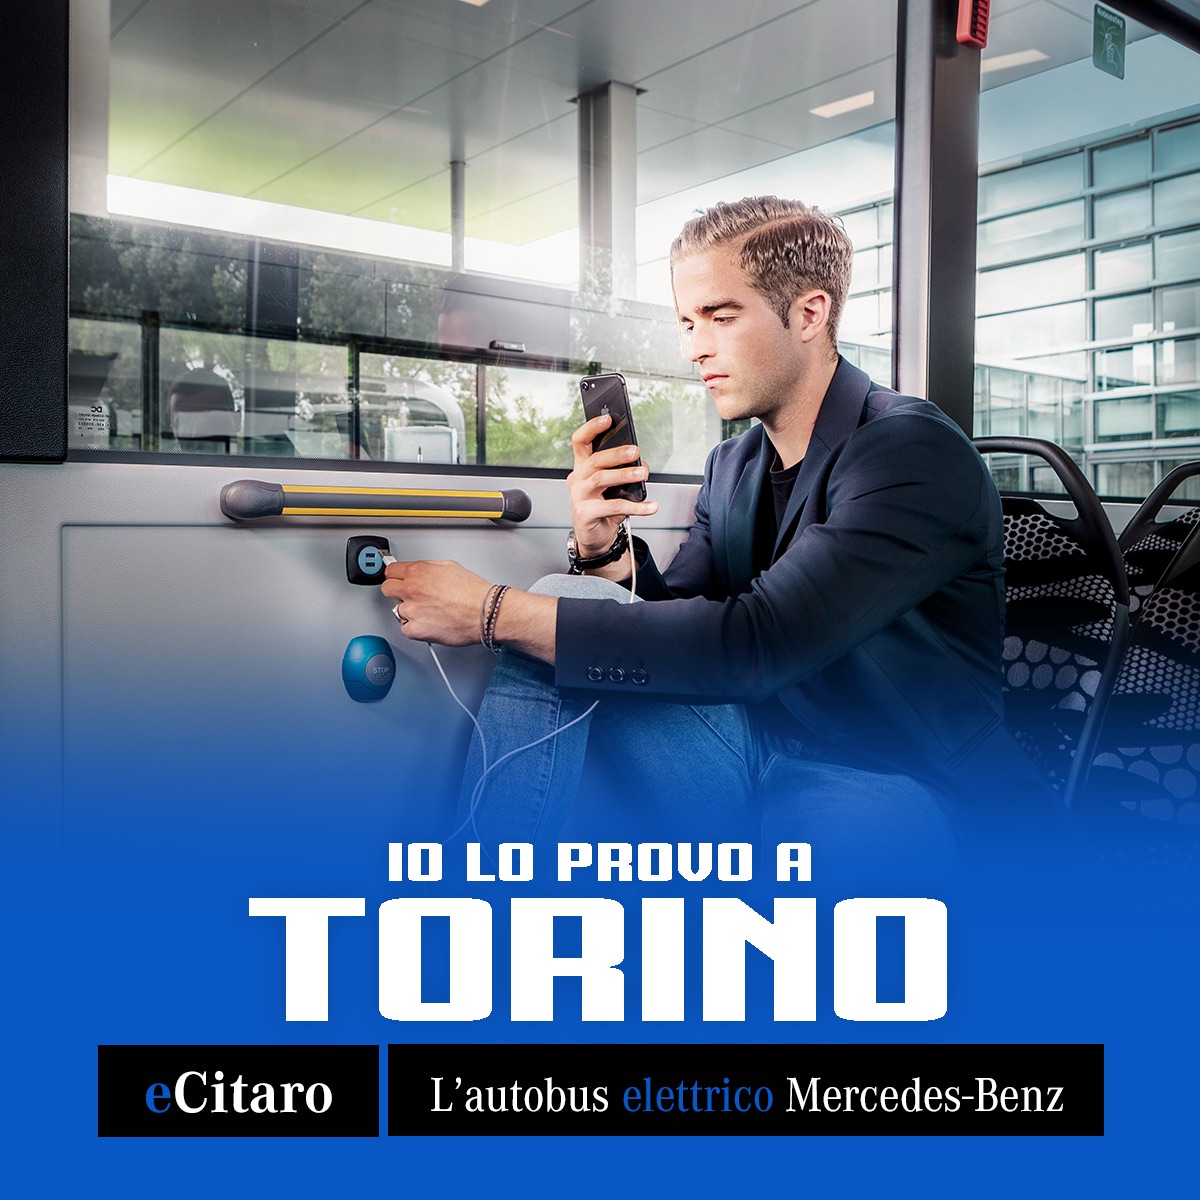 eCitaro MercedesBenz in prova a Torino settembre 2019